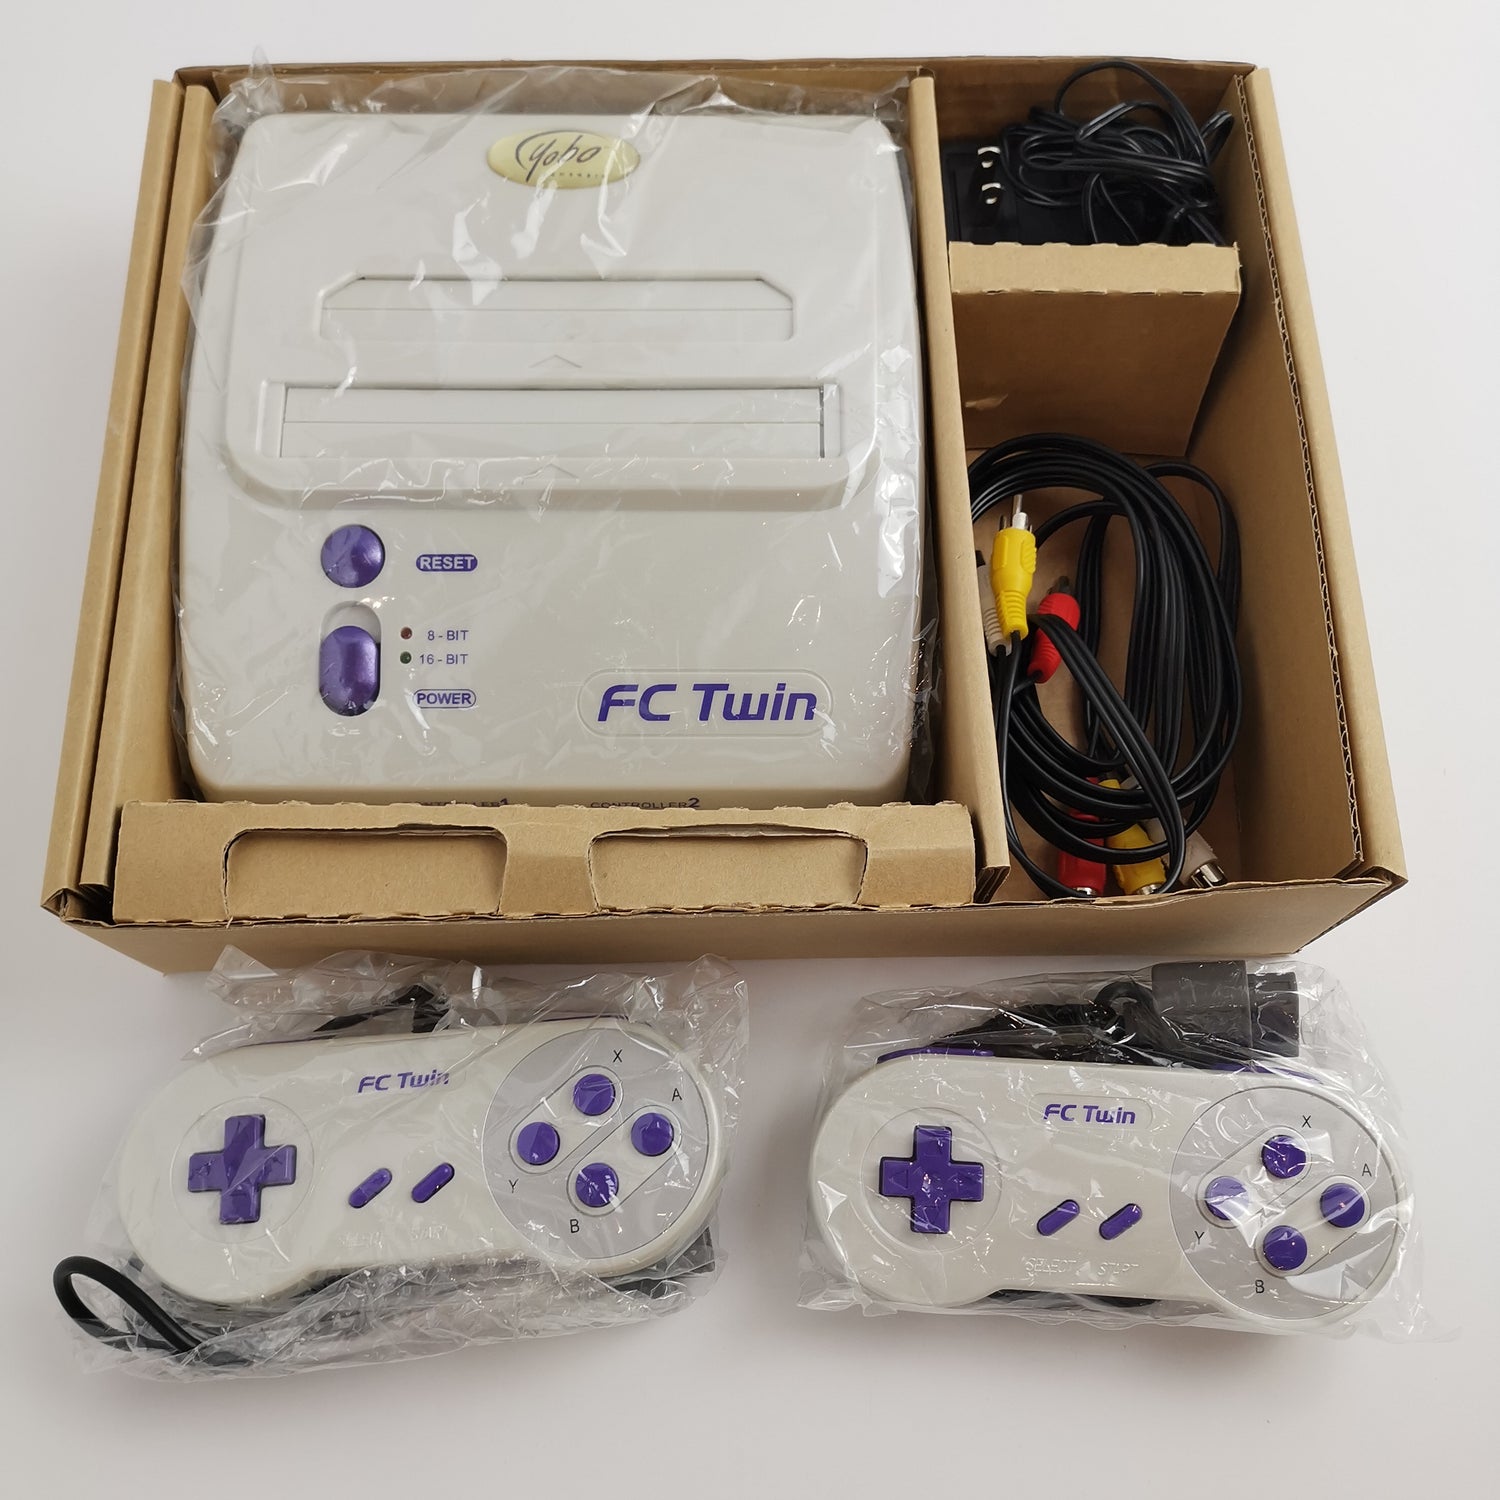 FC Twin Video Game System - 8-Bit & 16-Bit | Yobo original packaging